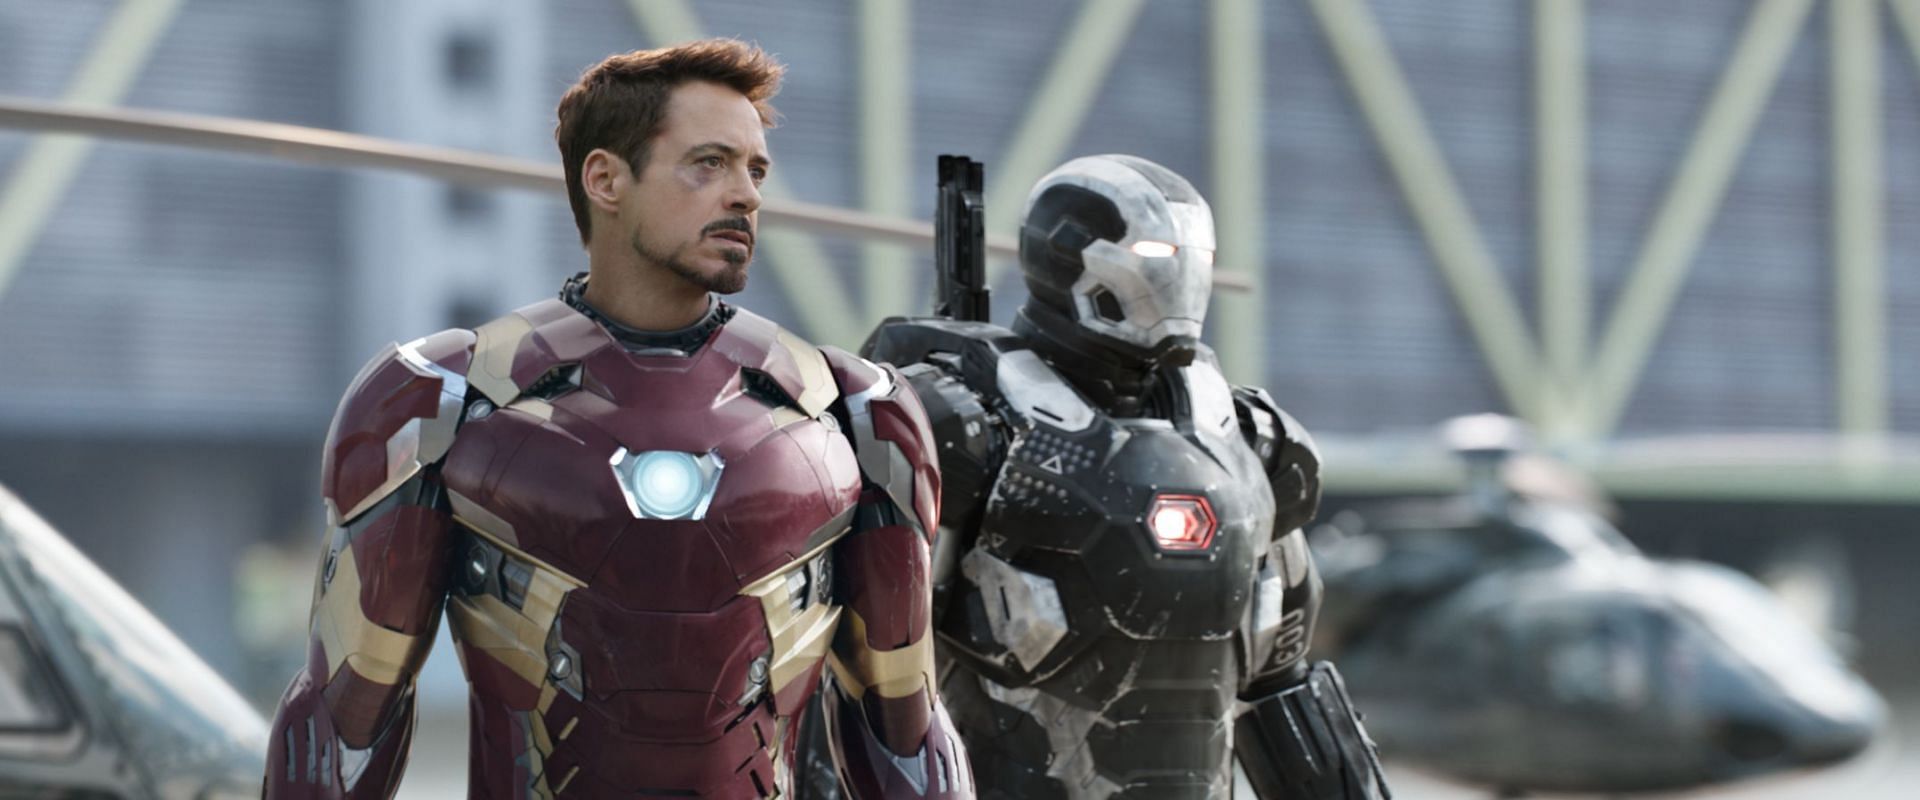 The Mark XLVI was a groundbreaking leap in Iron Man technology (Image via Marvel)